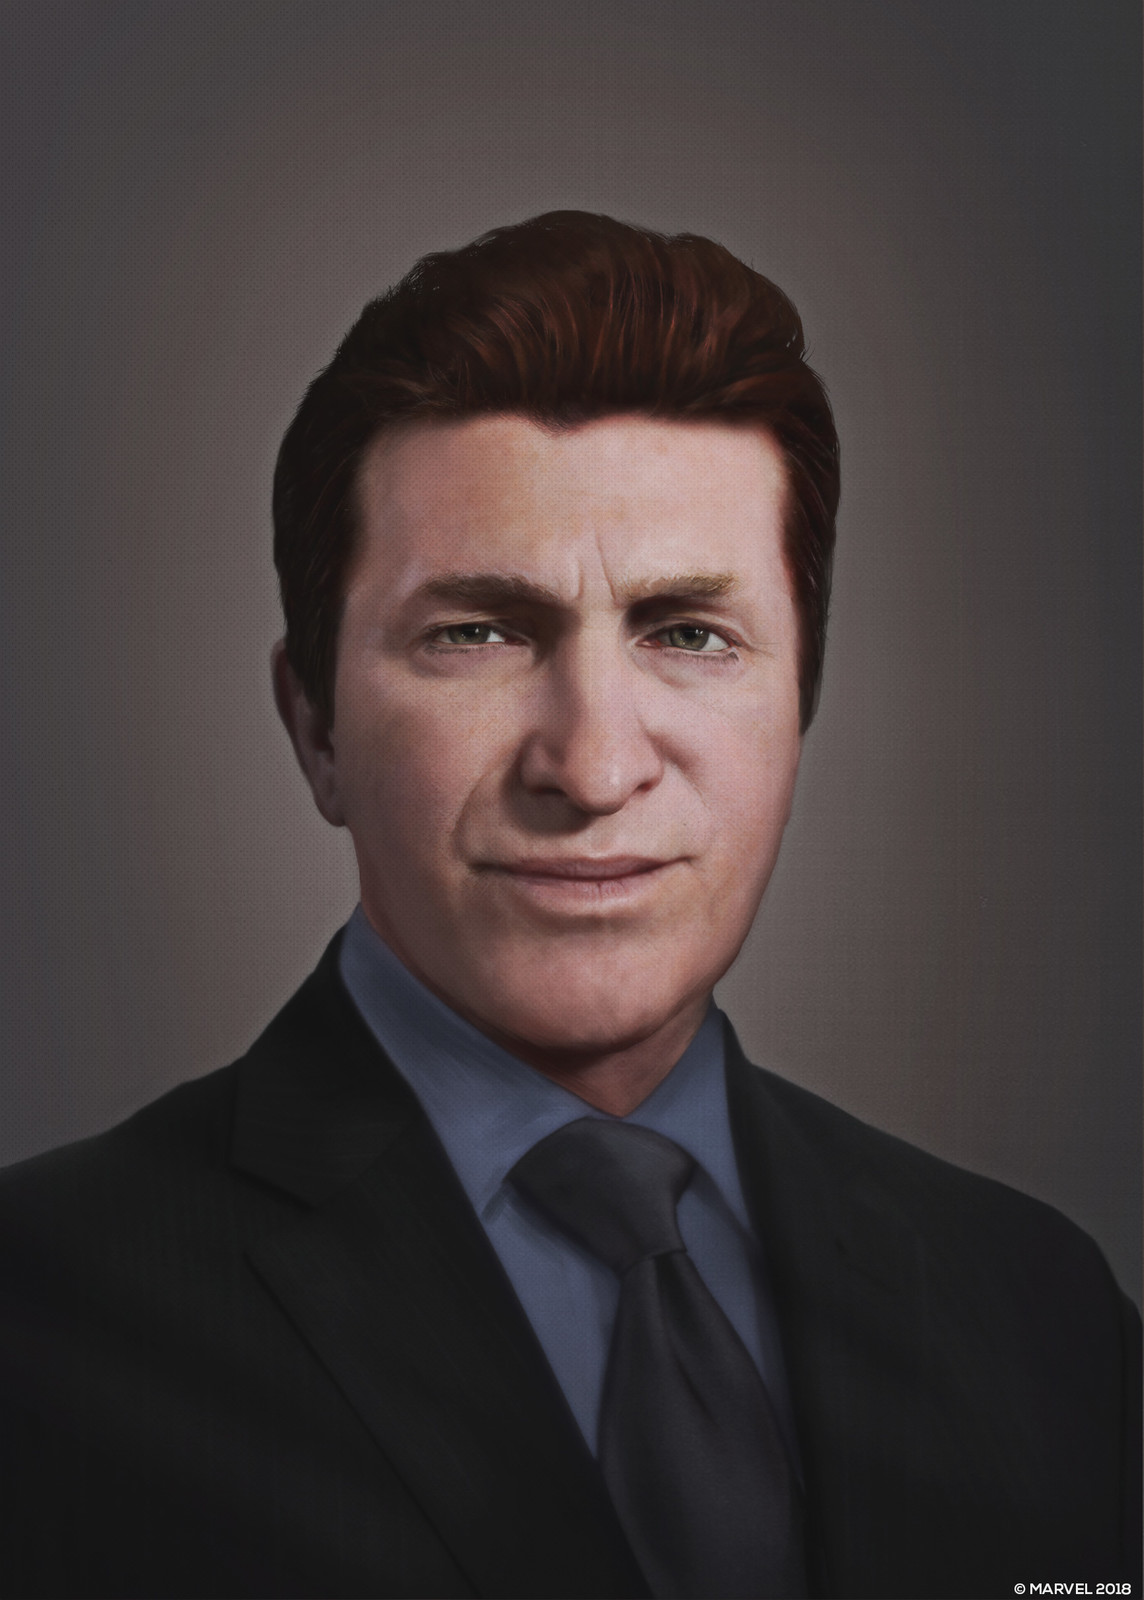 Mr Osborne's portrait for when he became Mayor of New York